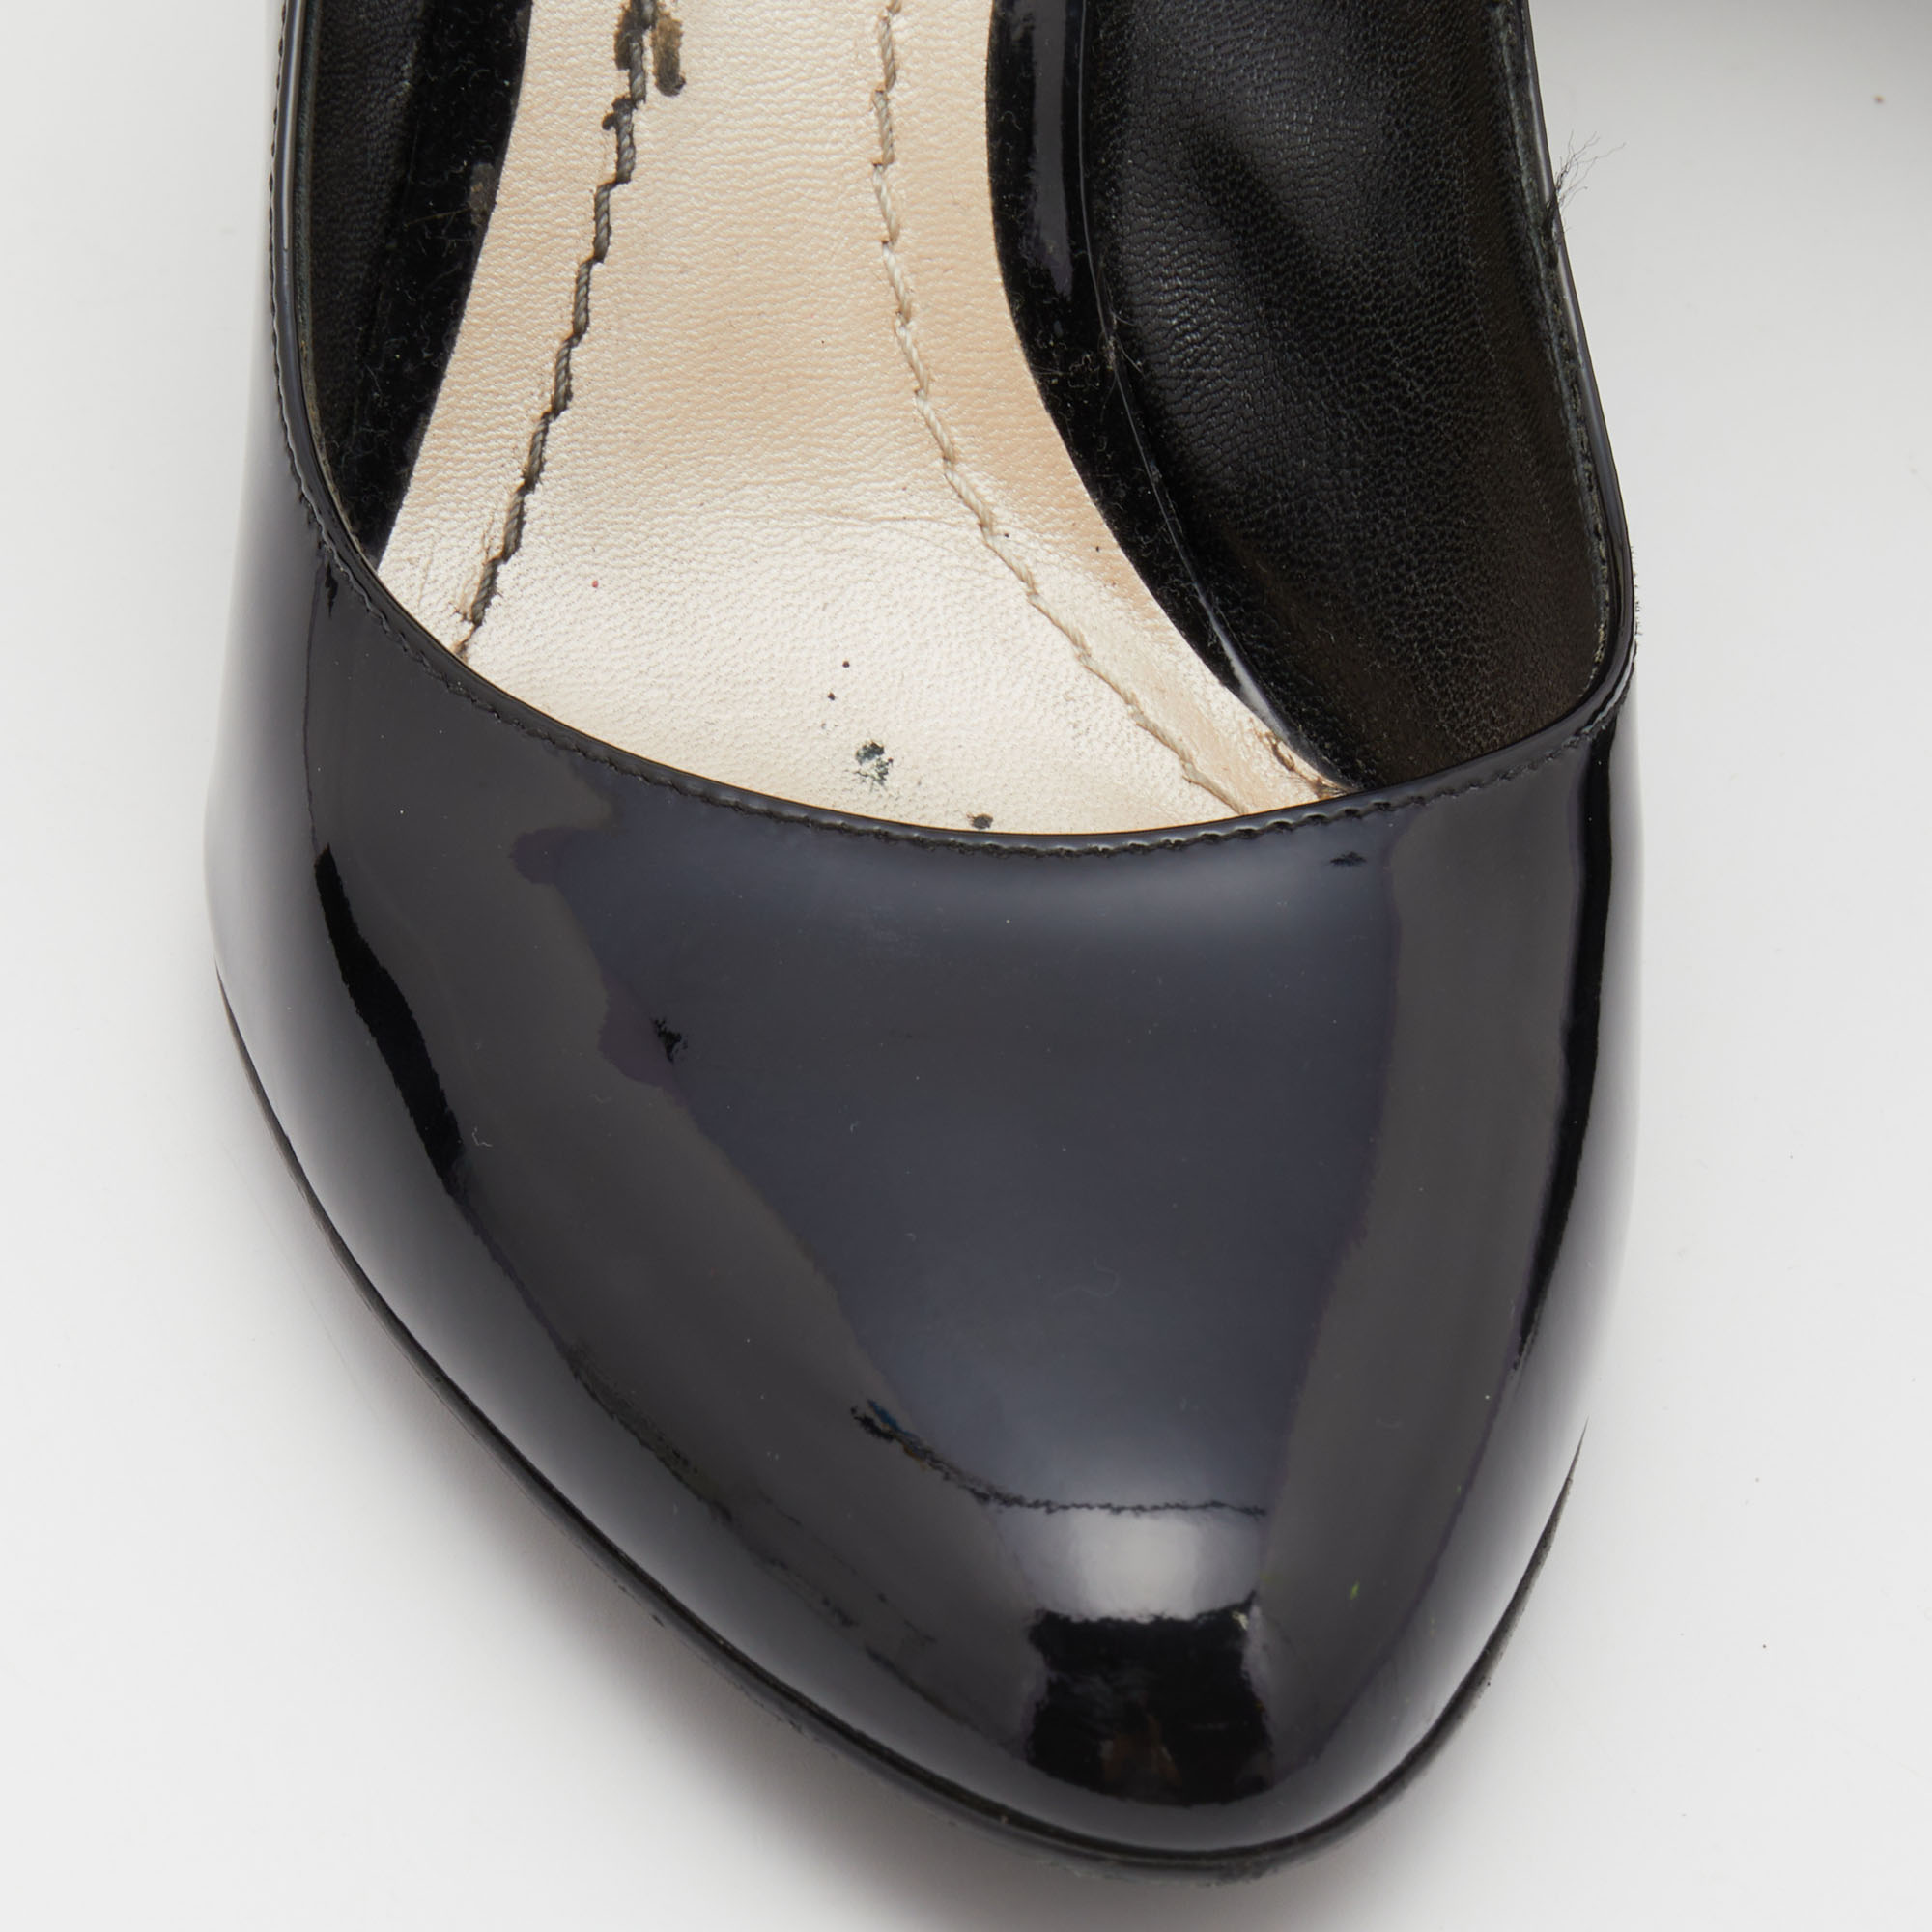 Dior Black Patent Leather Studded Block Heel Pumps Size 37